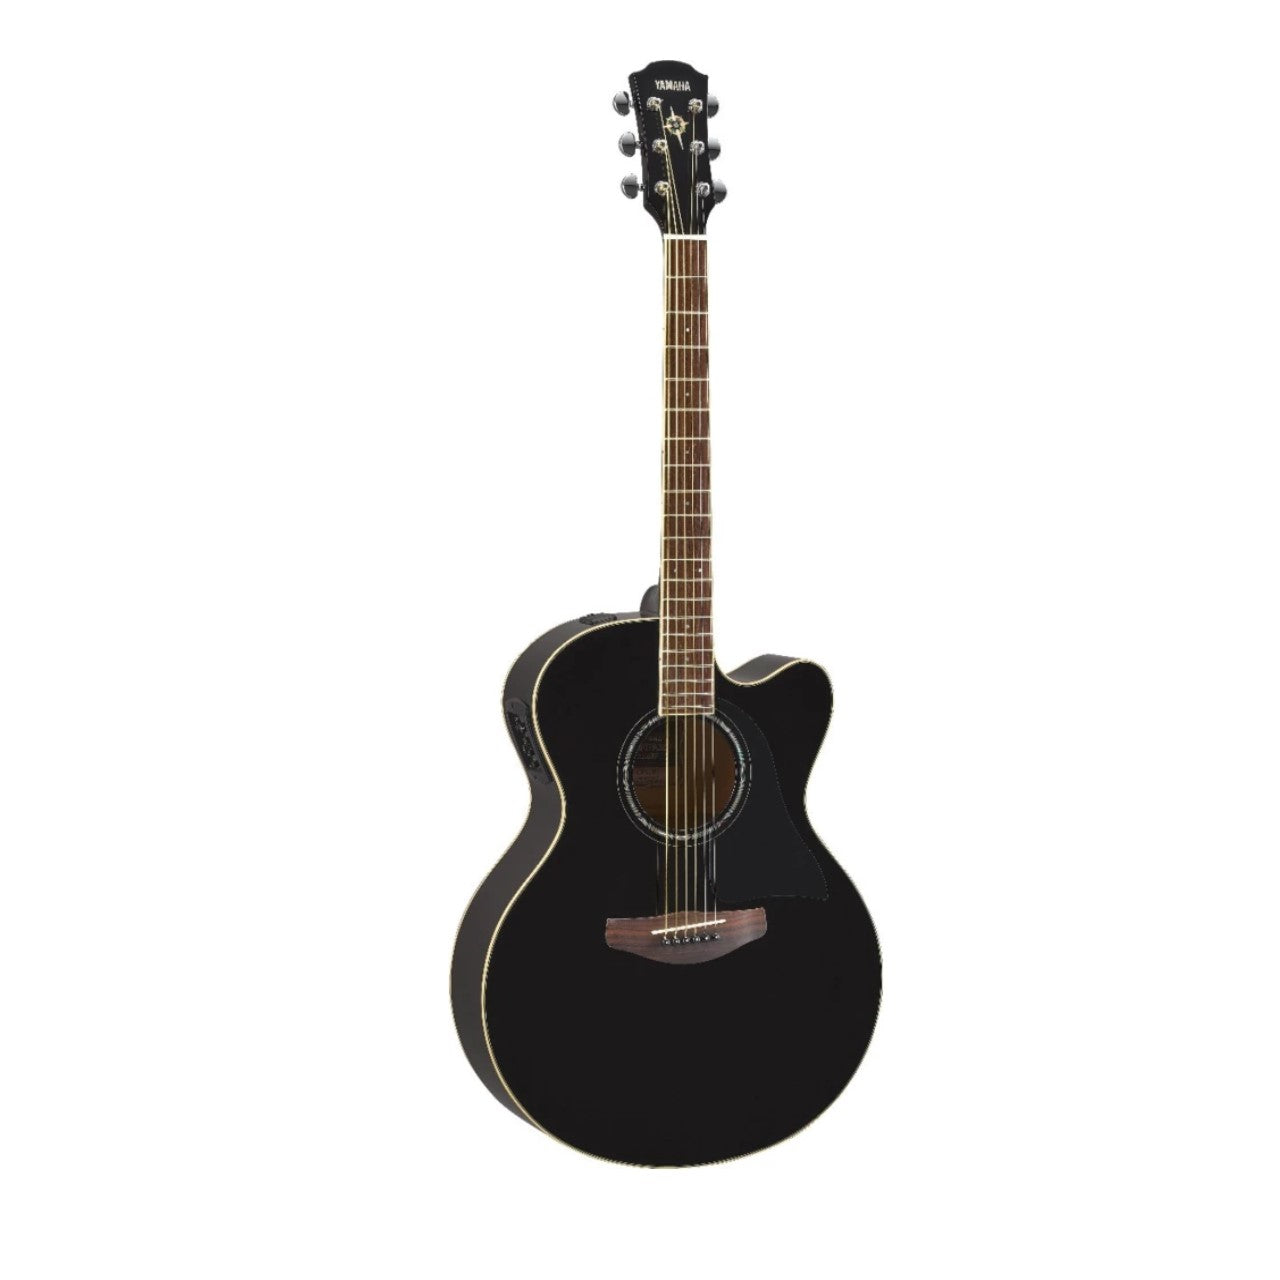 Yamaha Guitarra Electroacustica Serie CPX600 en color Negro